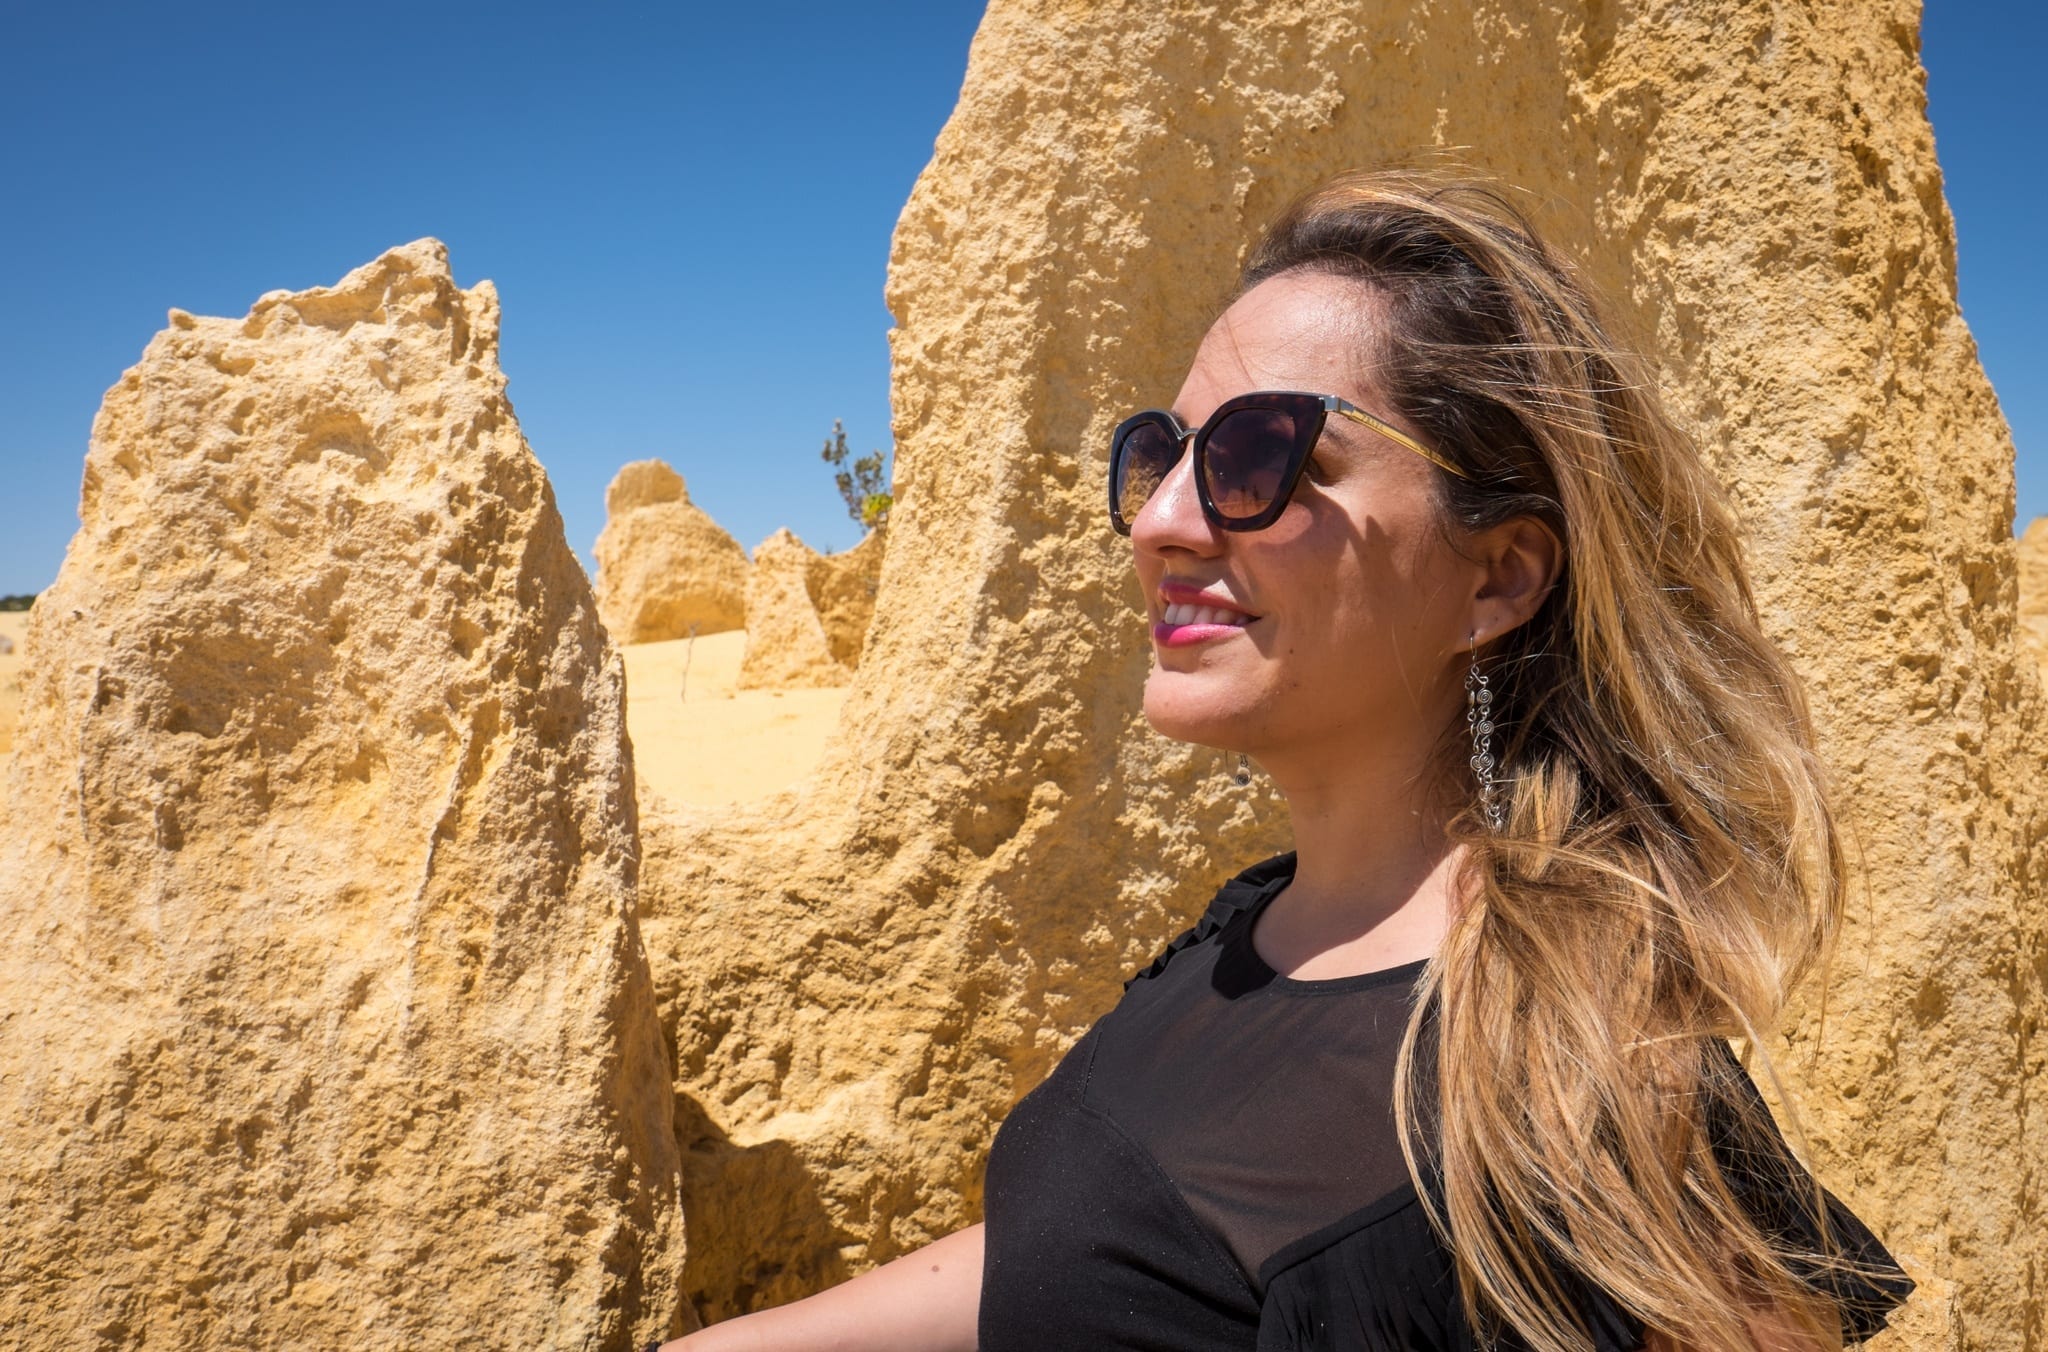 Kate at Pinnacles Desert